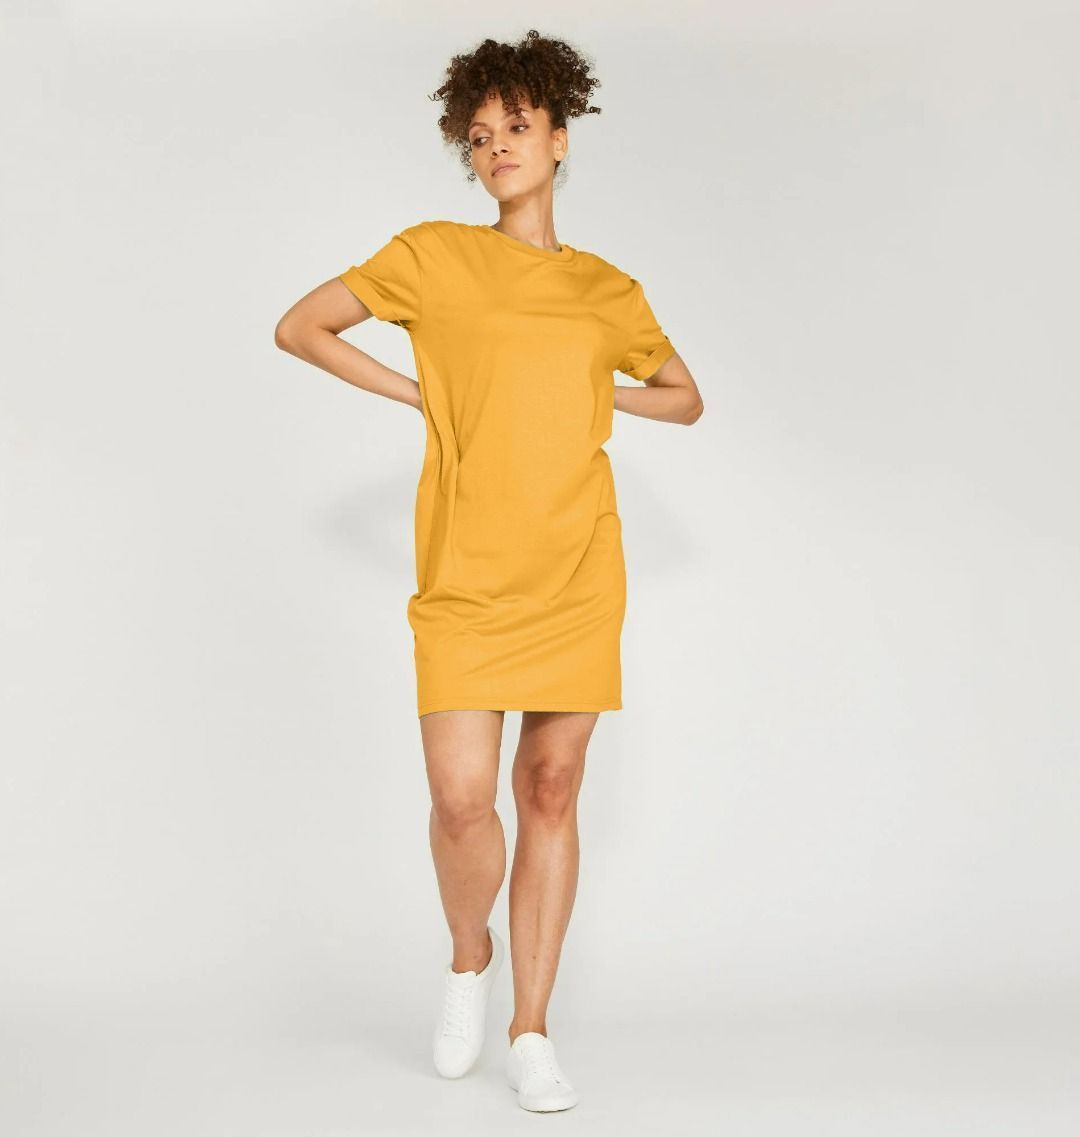 Women's organic cotton t-shirt dress